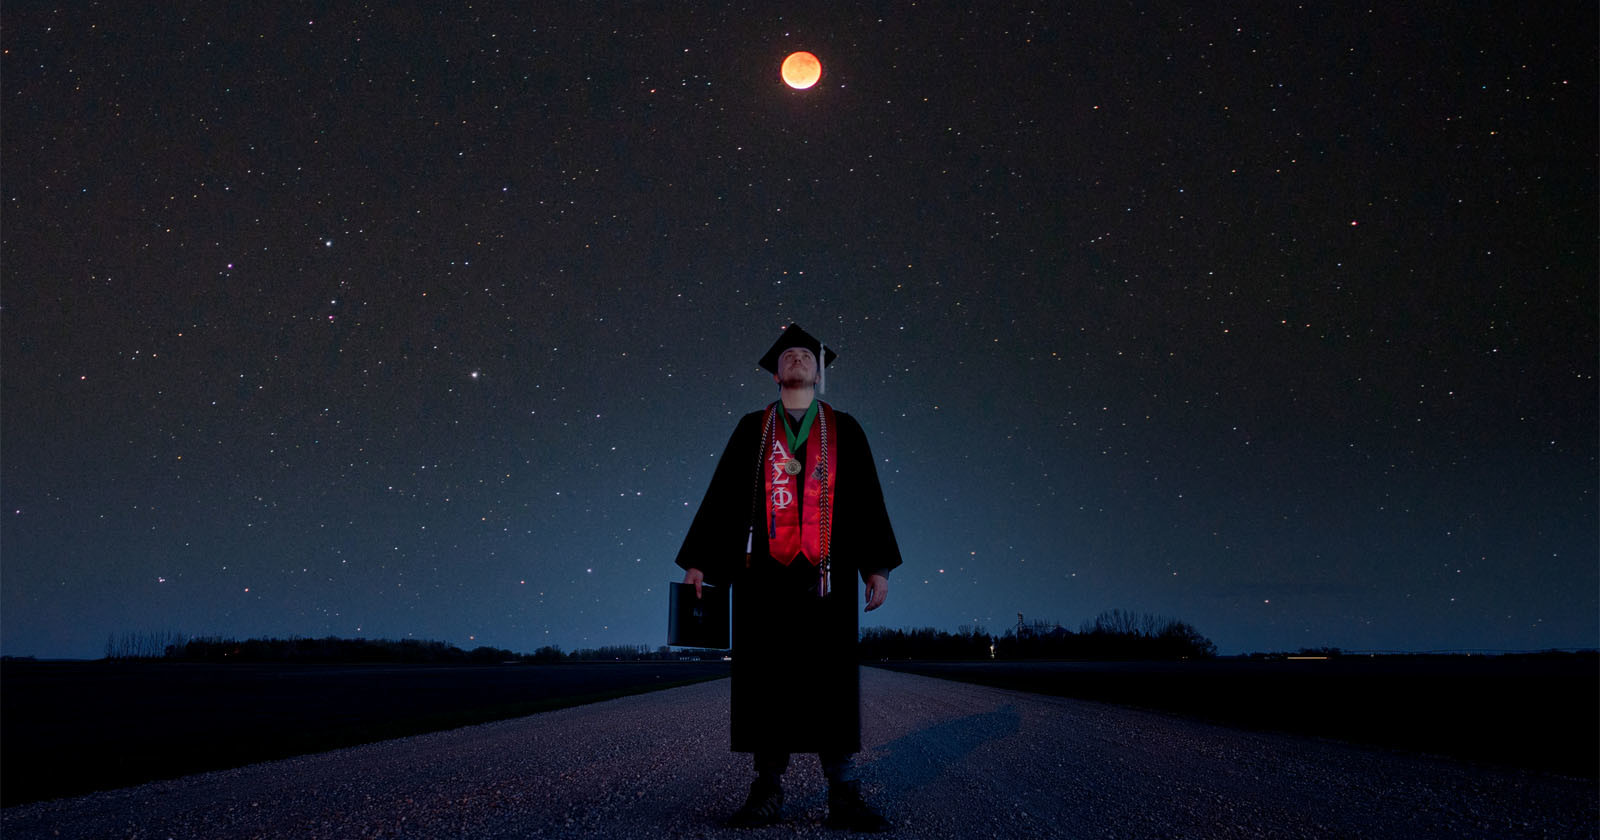  astrophysics student takes graduation photo under total lunar 